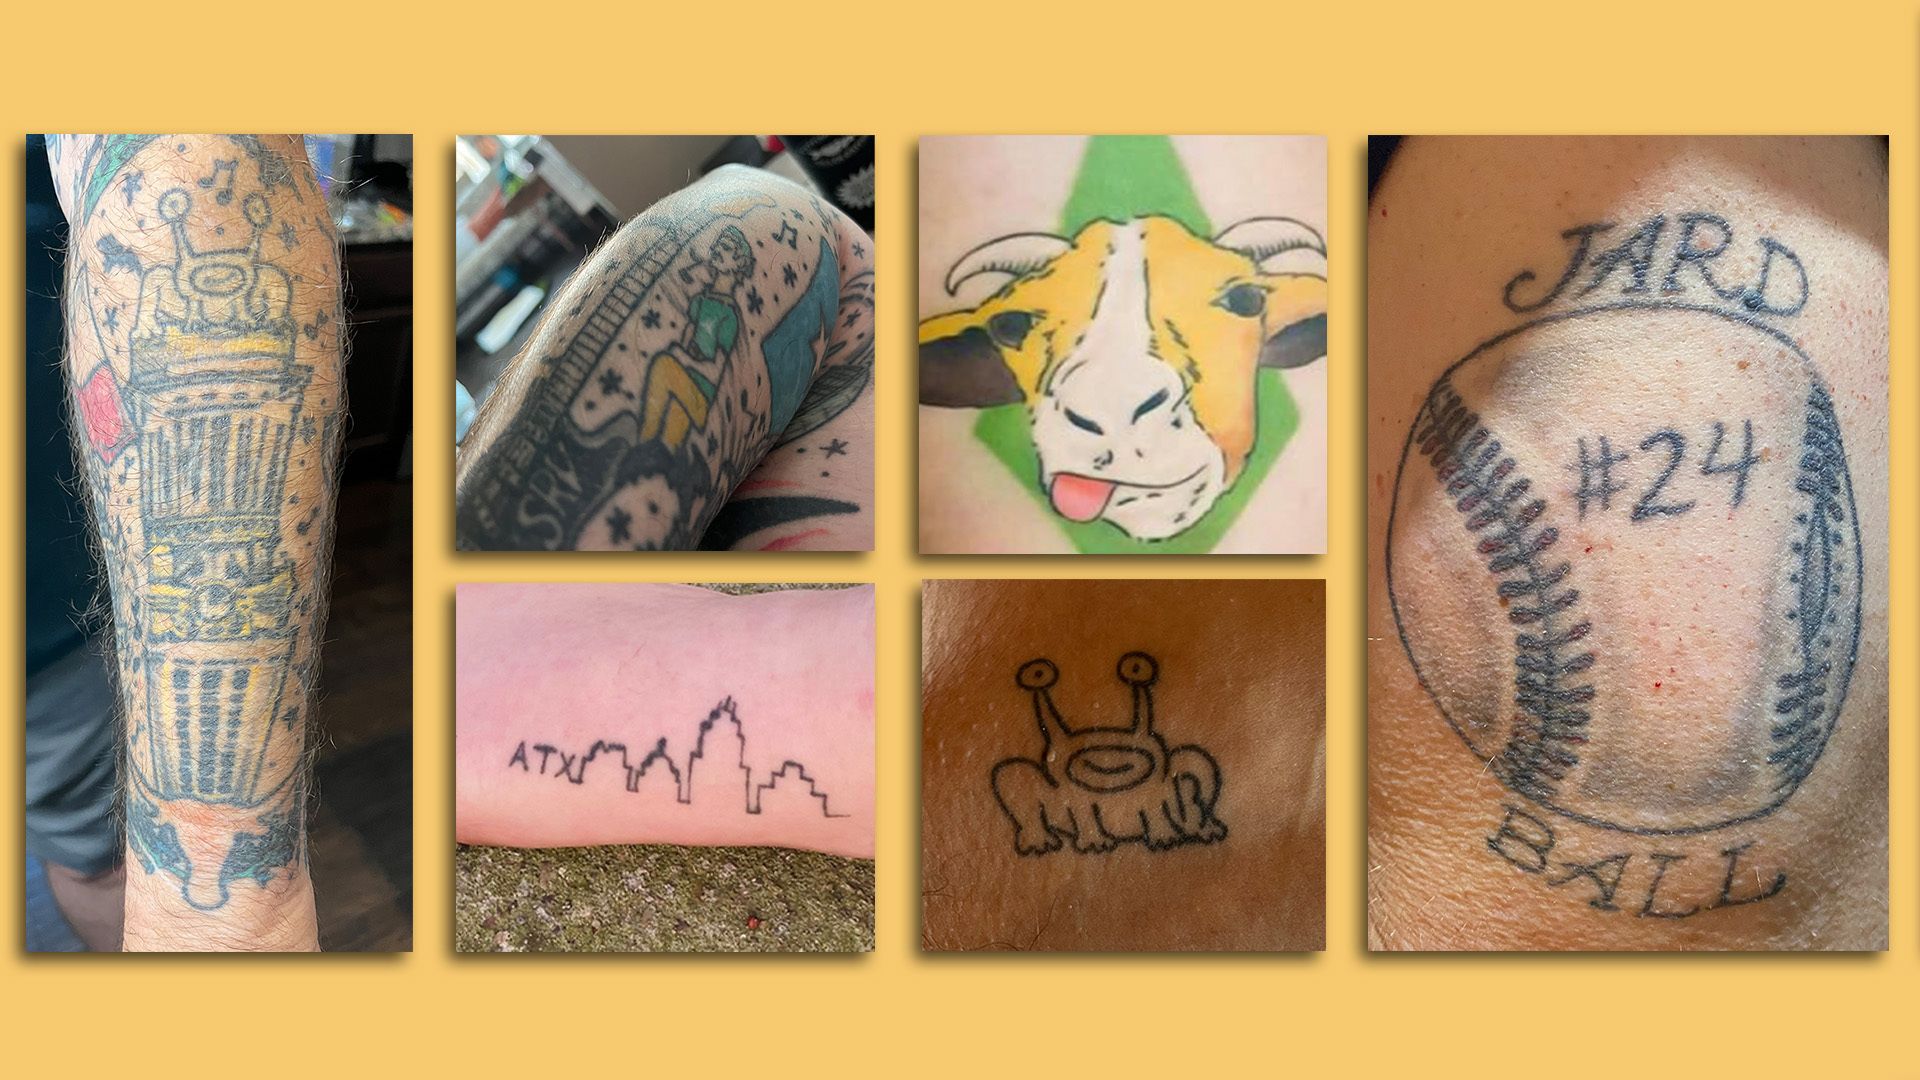 Photos of tattoos.